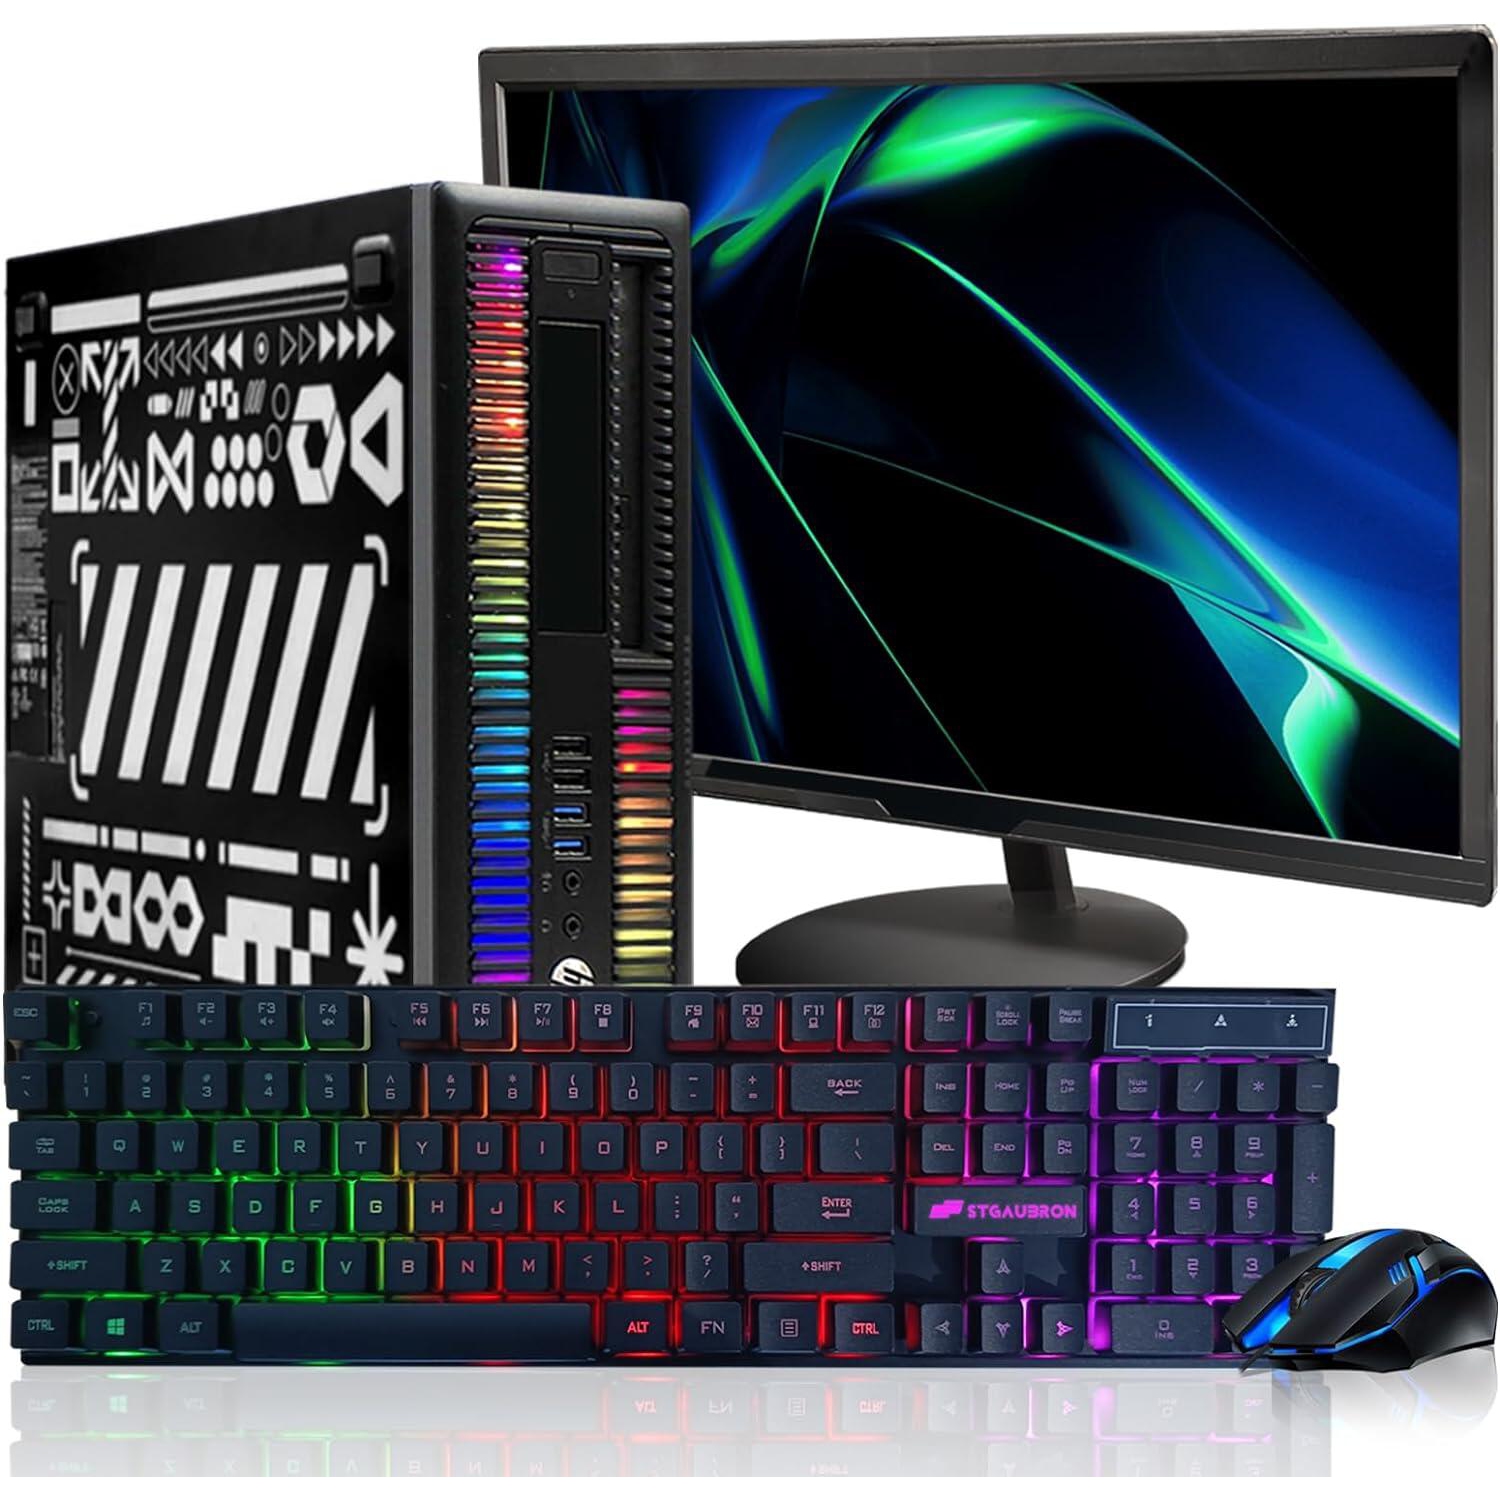 HP RGB Gaming Desktop Computer, Intel Core I7 3.4G up to 3.9GHz, Radeon RX 550 4G, 16GB, 512G SSD, New 24" FHD LED, RGB KB & MS, 600M WiFi & BT 5.0, W10P64 -Refurbished Excellent